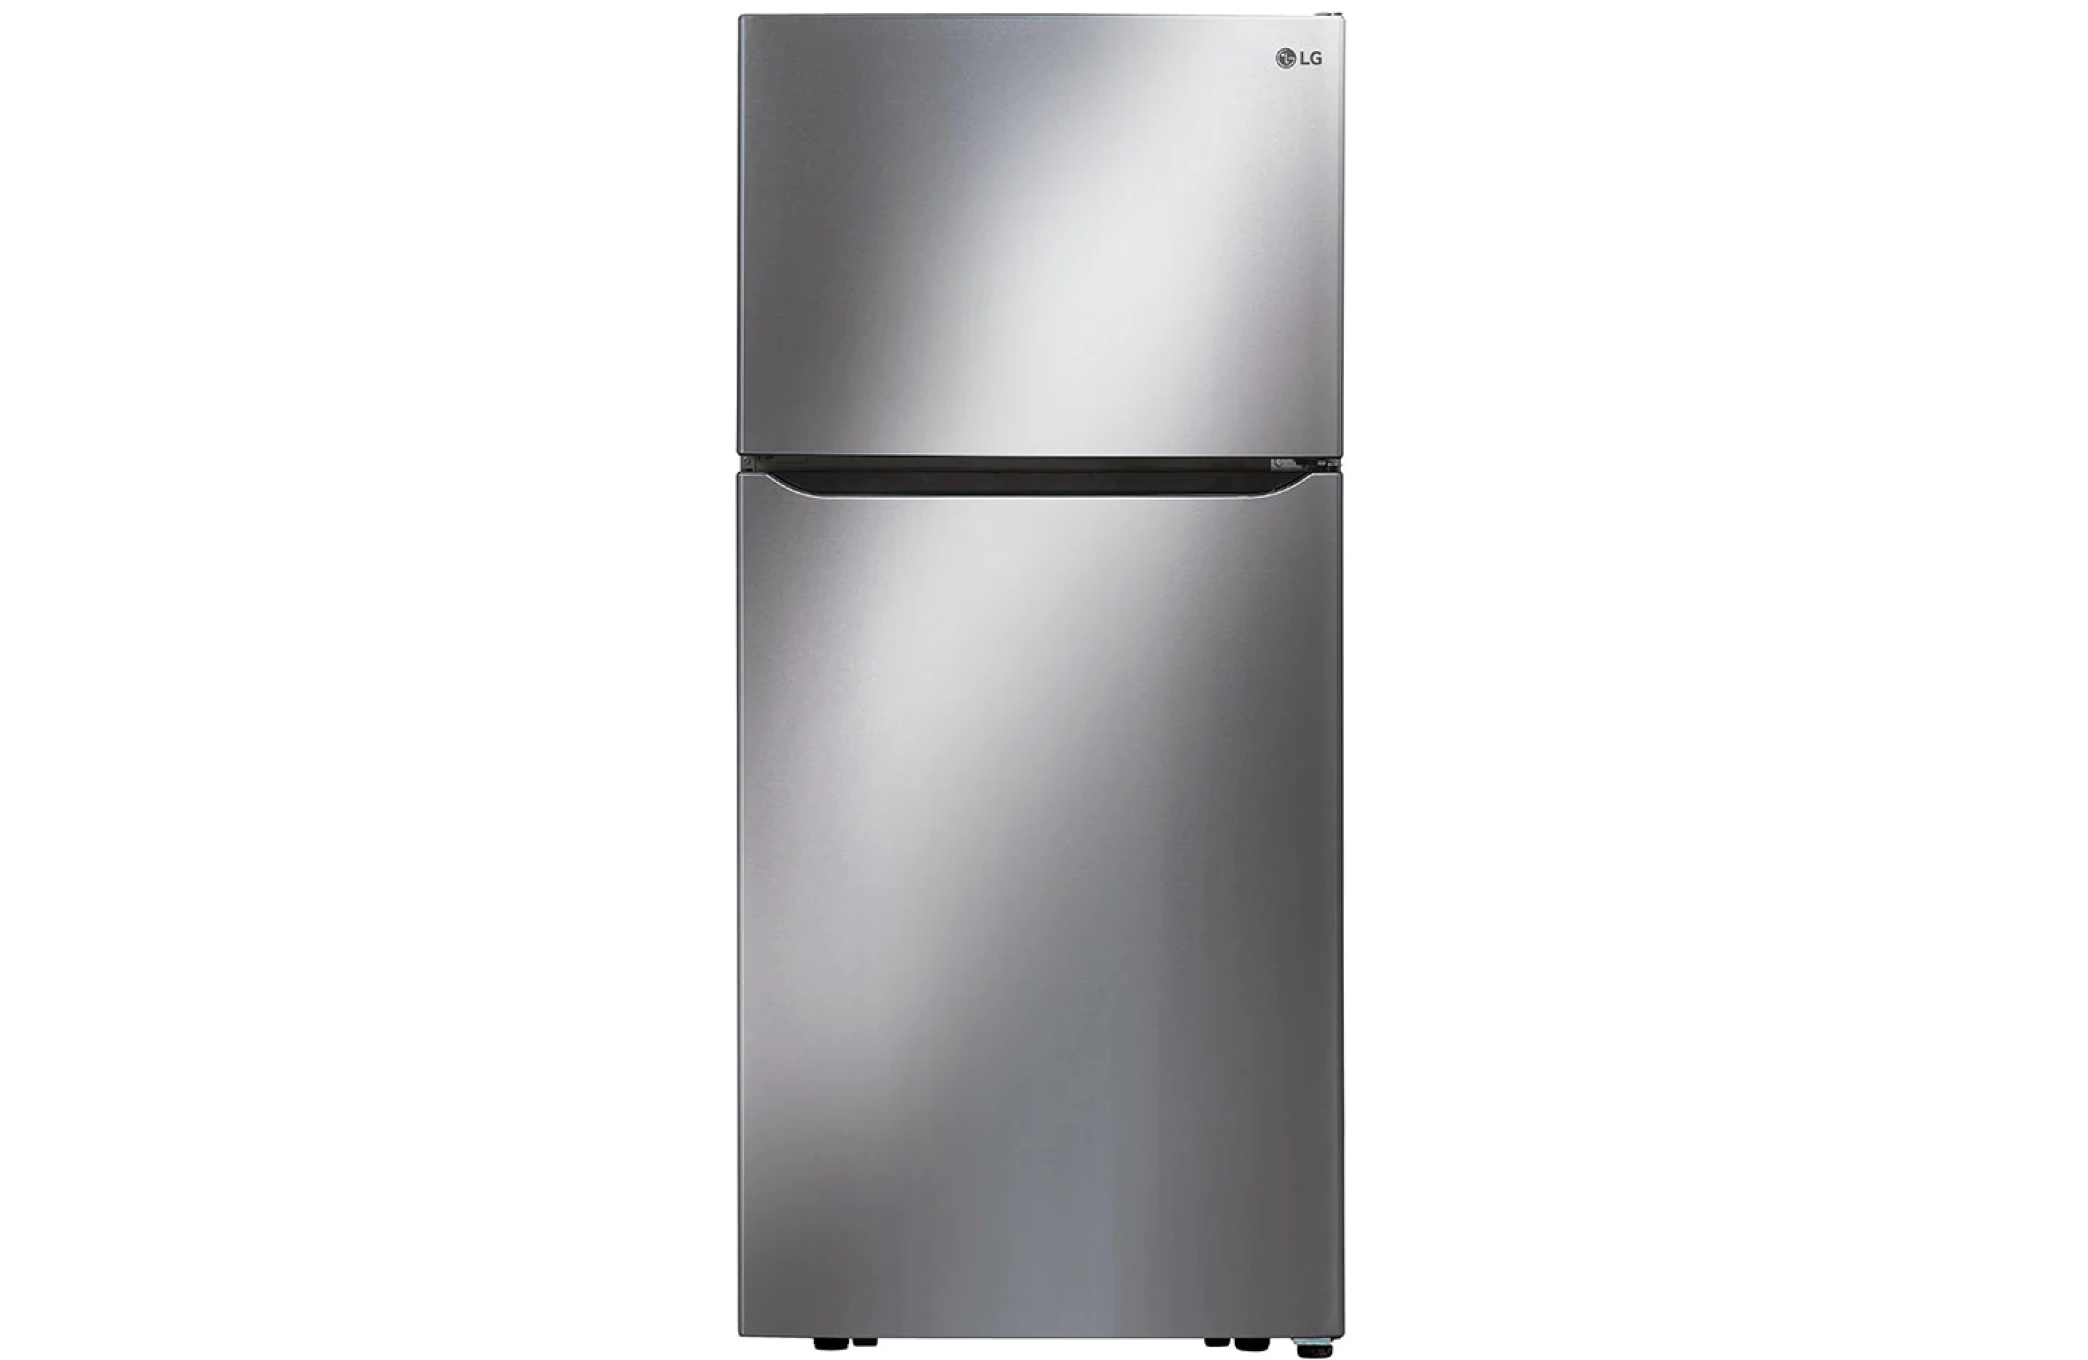  LG 30” Top Mount Refrigerator, 20 cu.ft., LTCS20020V